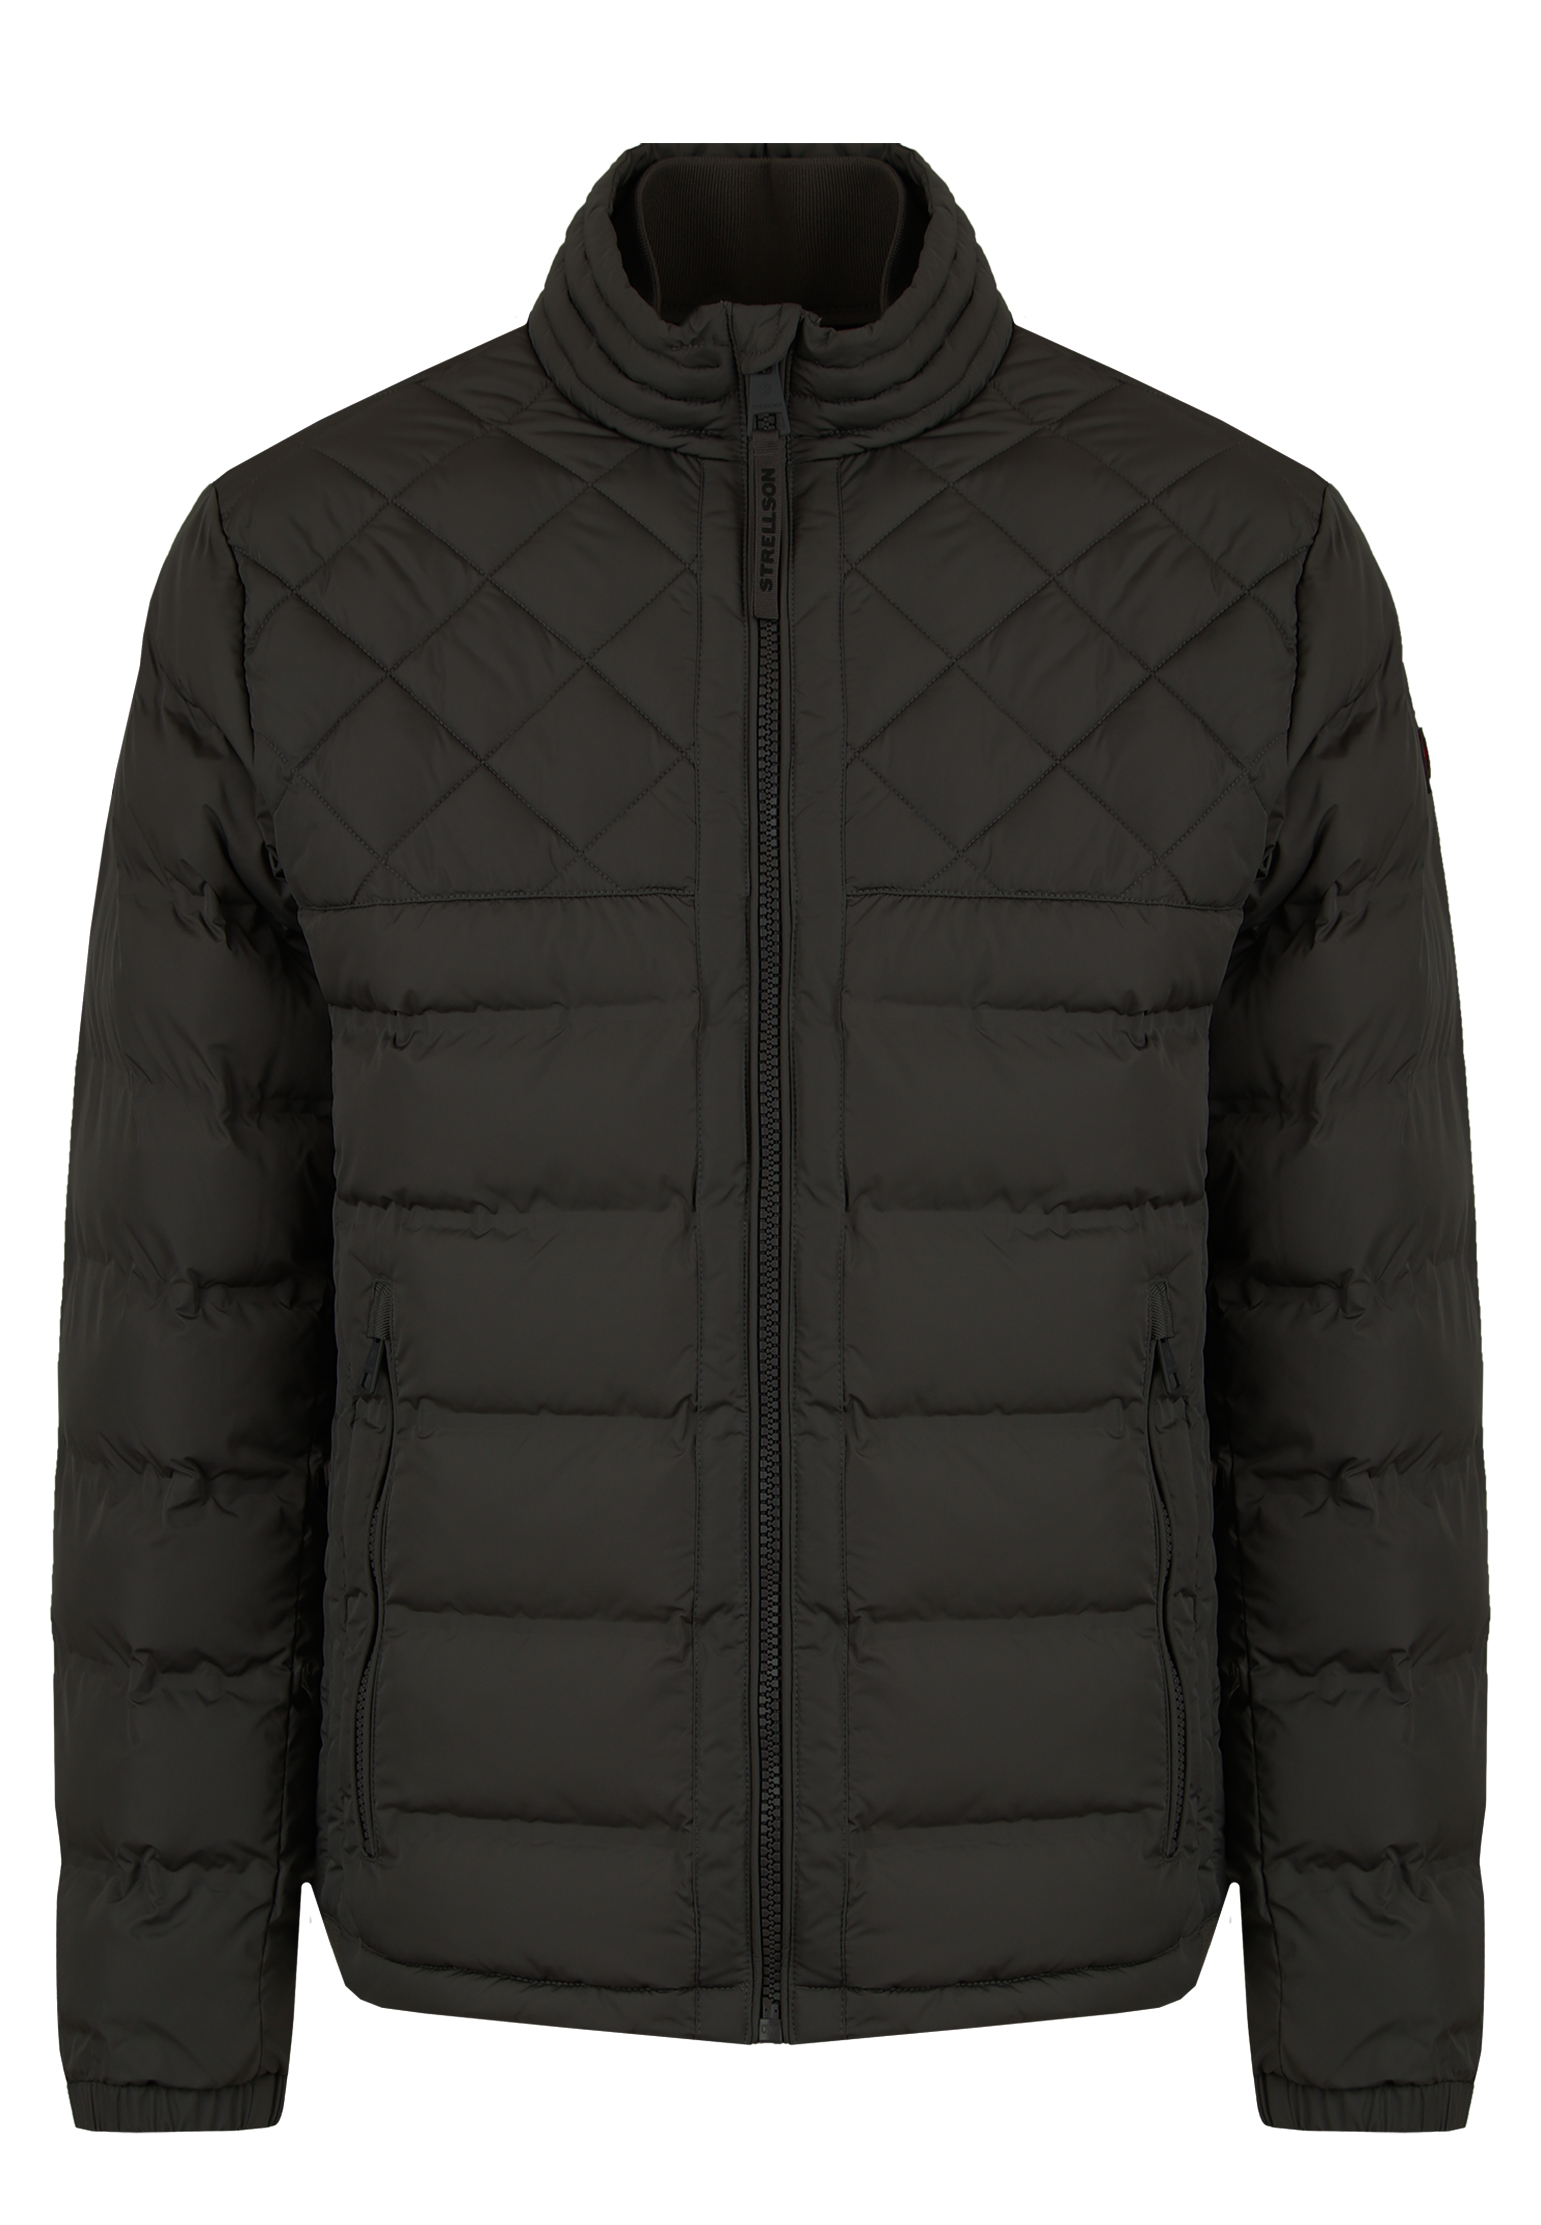 Куртка STRELLSON Черный, размер 46 180337 - фото 1